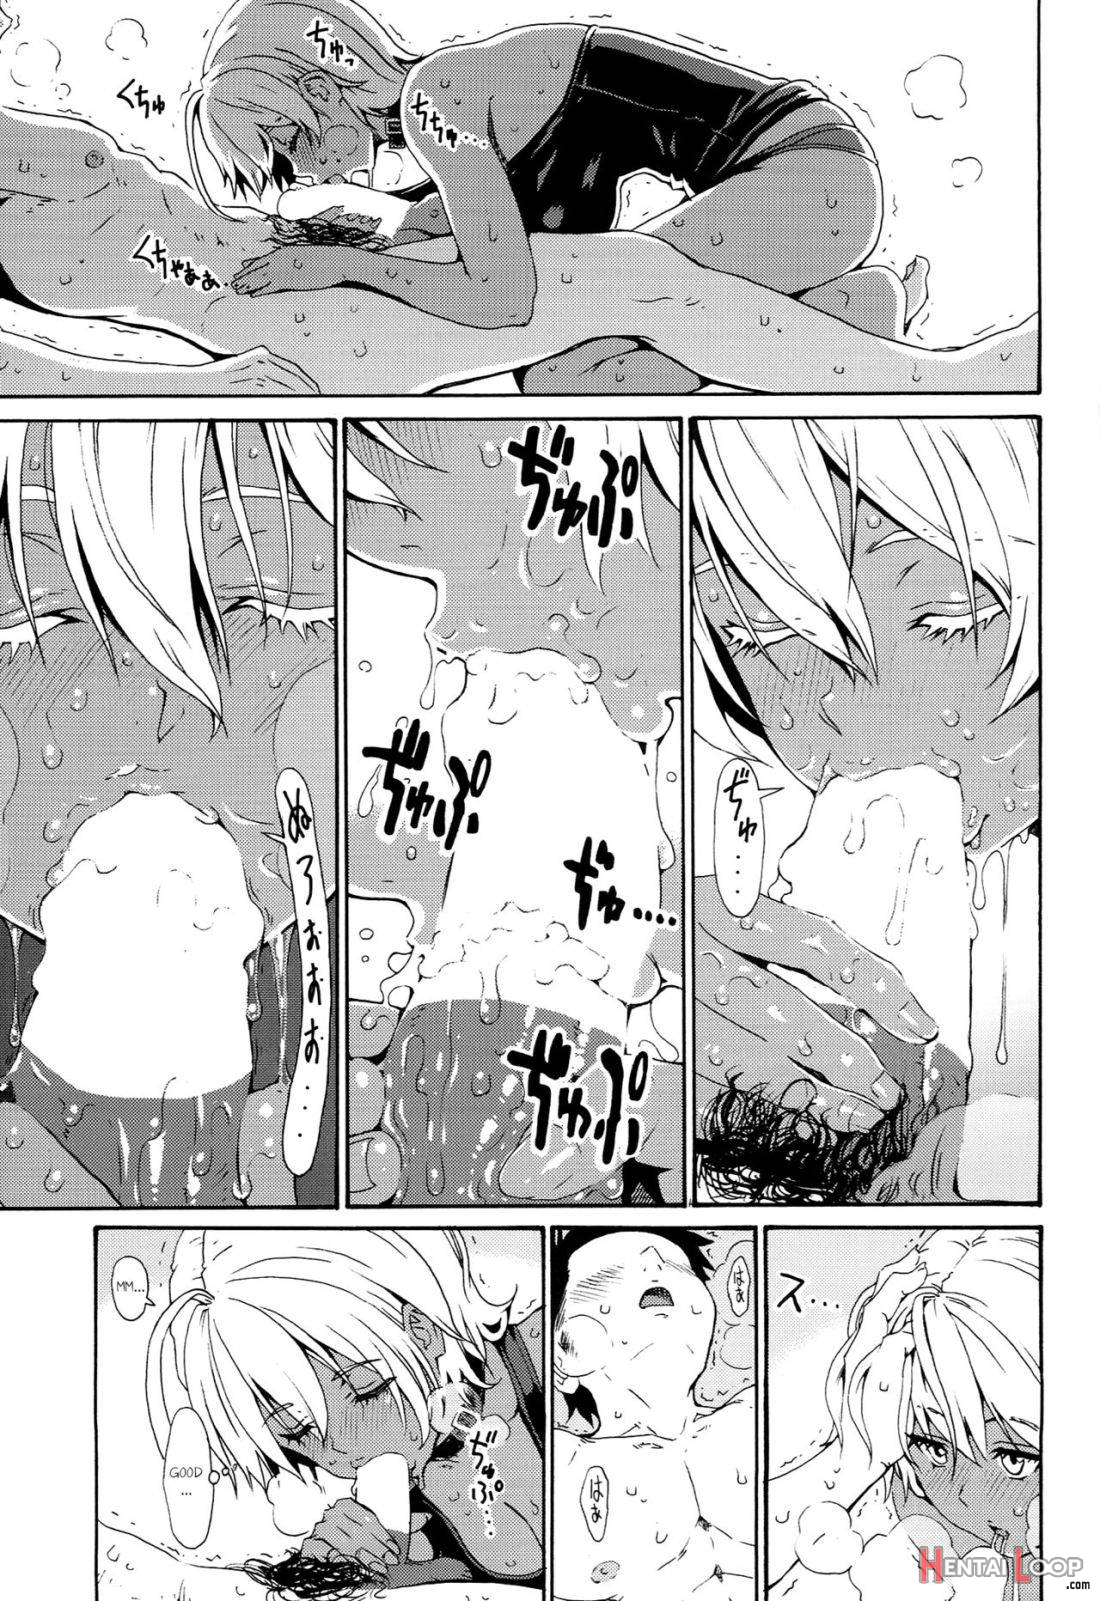 Ikumi-chan Niku Niku 2 page 8